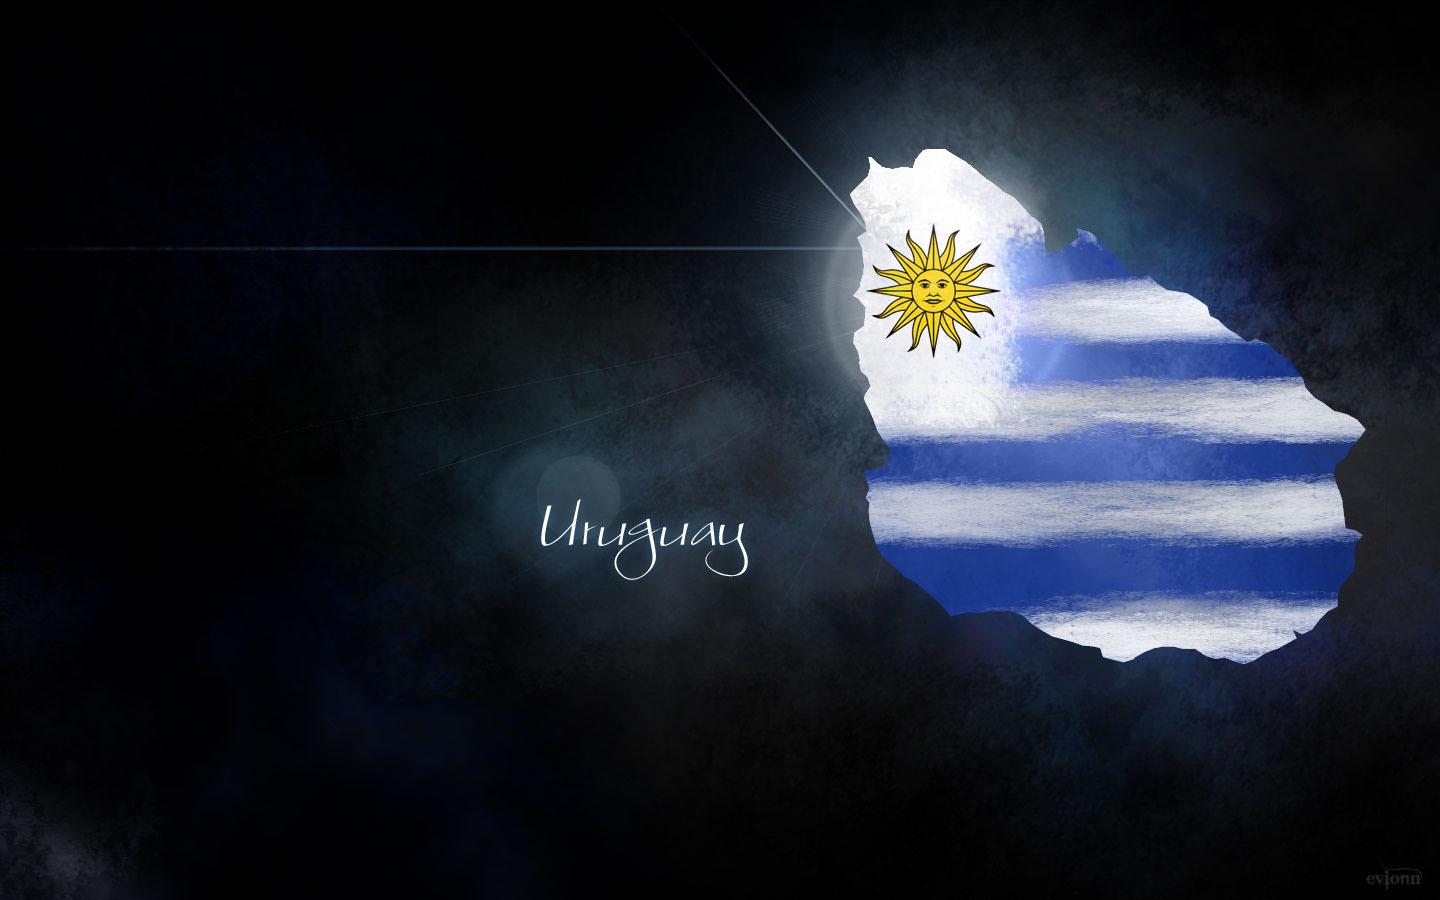 Uruguay Wallpaper, Picture